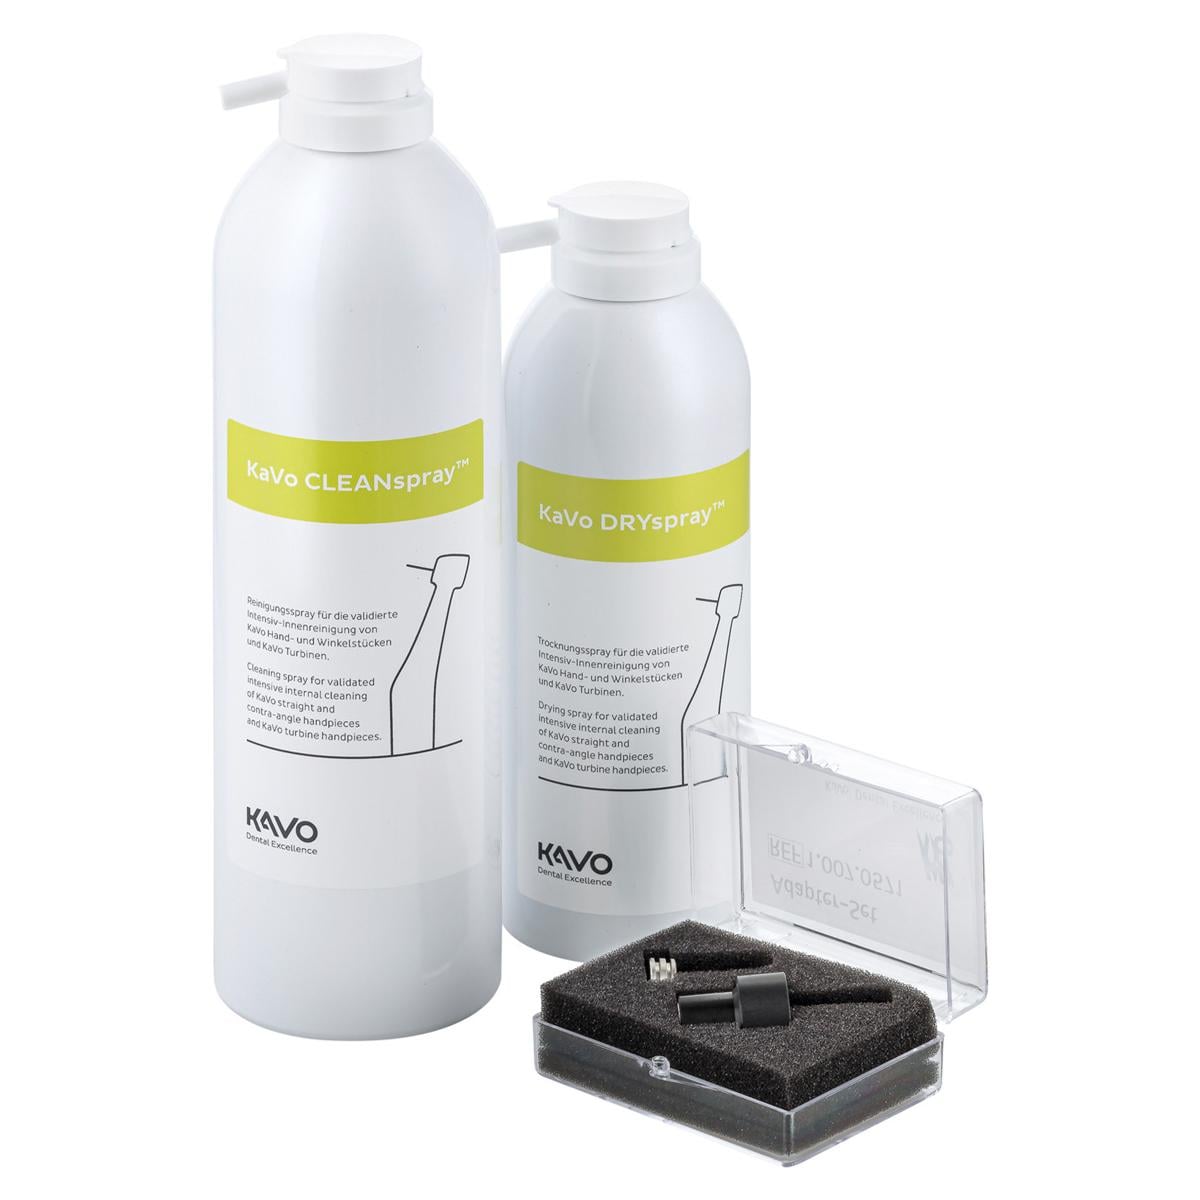 KaVo CLEANspray / KaVo DRYspray - Starter Kit - Set